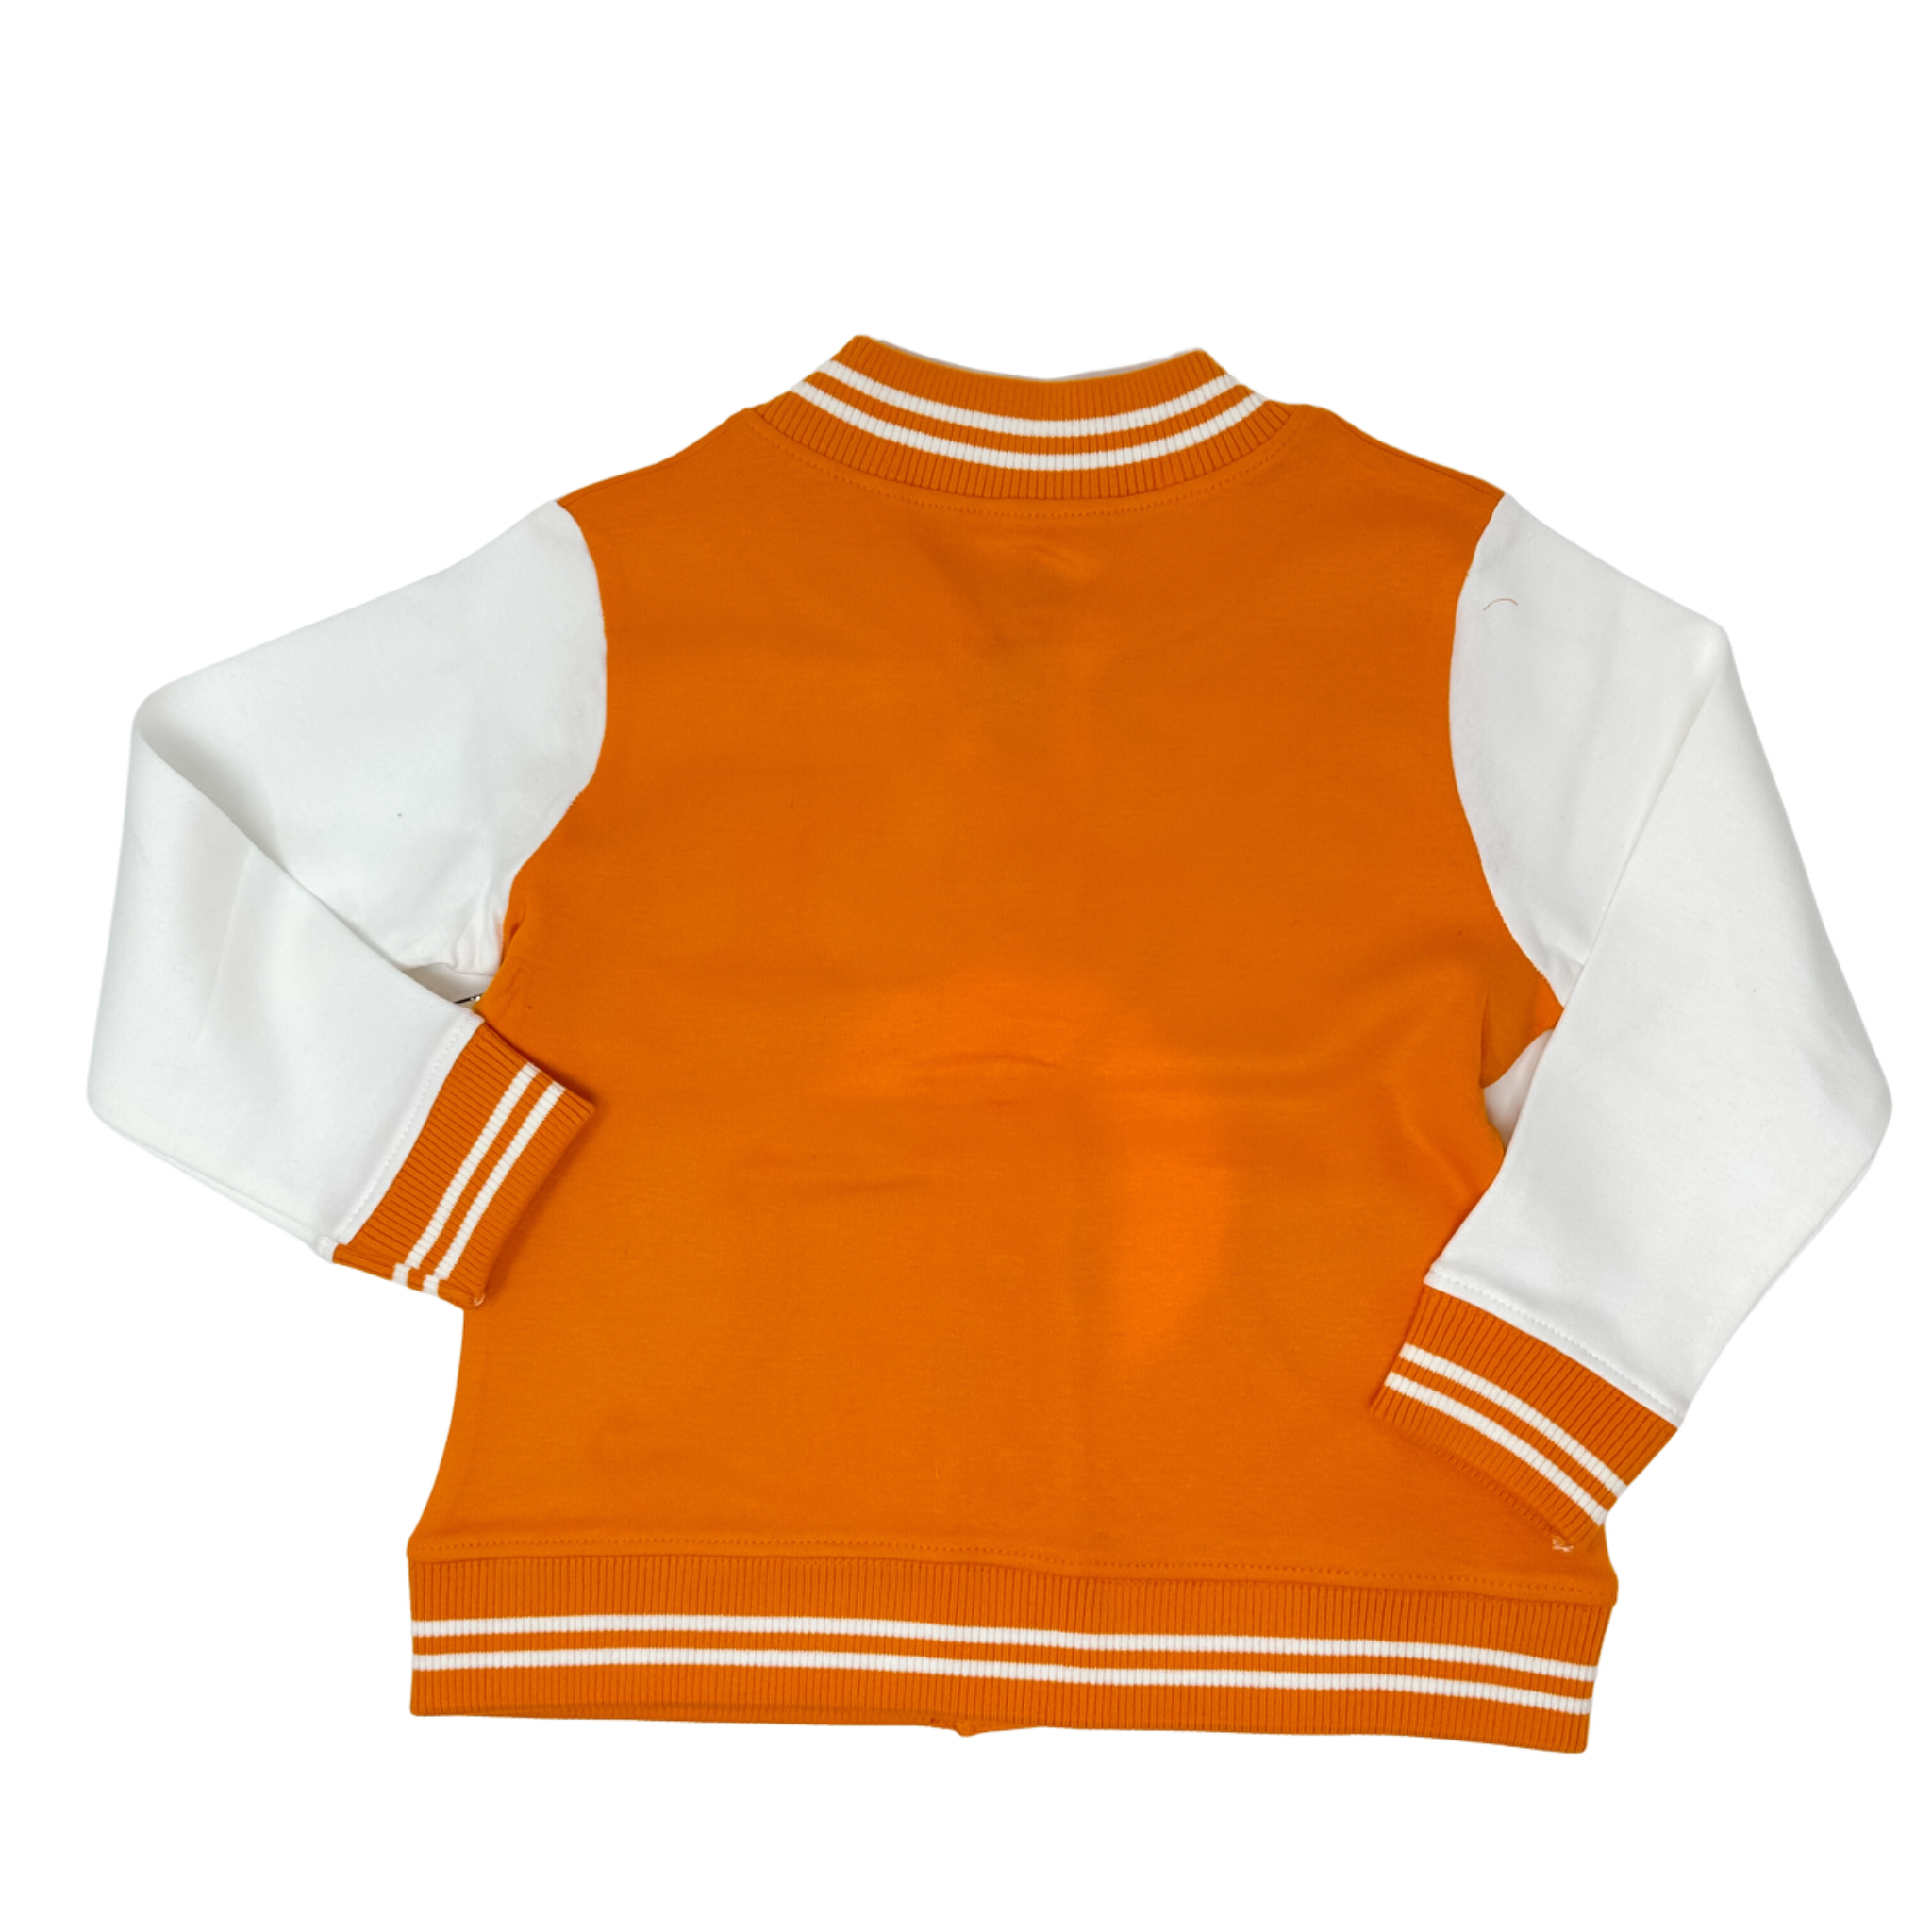 Creative Knitwear - Varsity Jacket - TN Orange